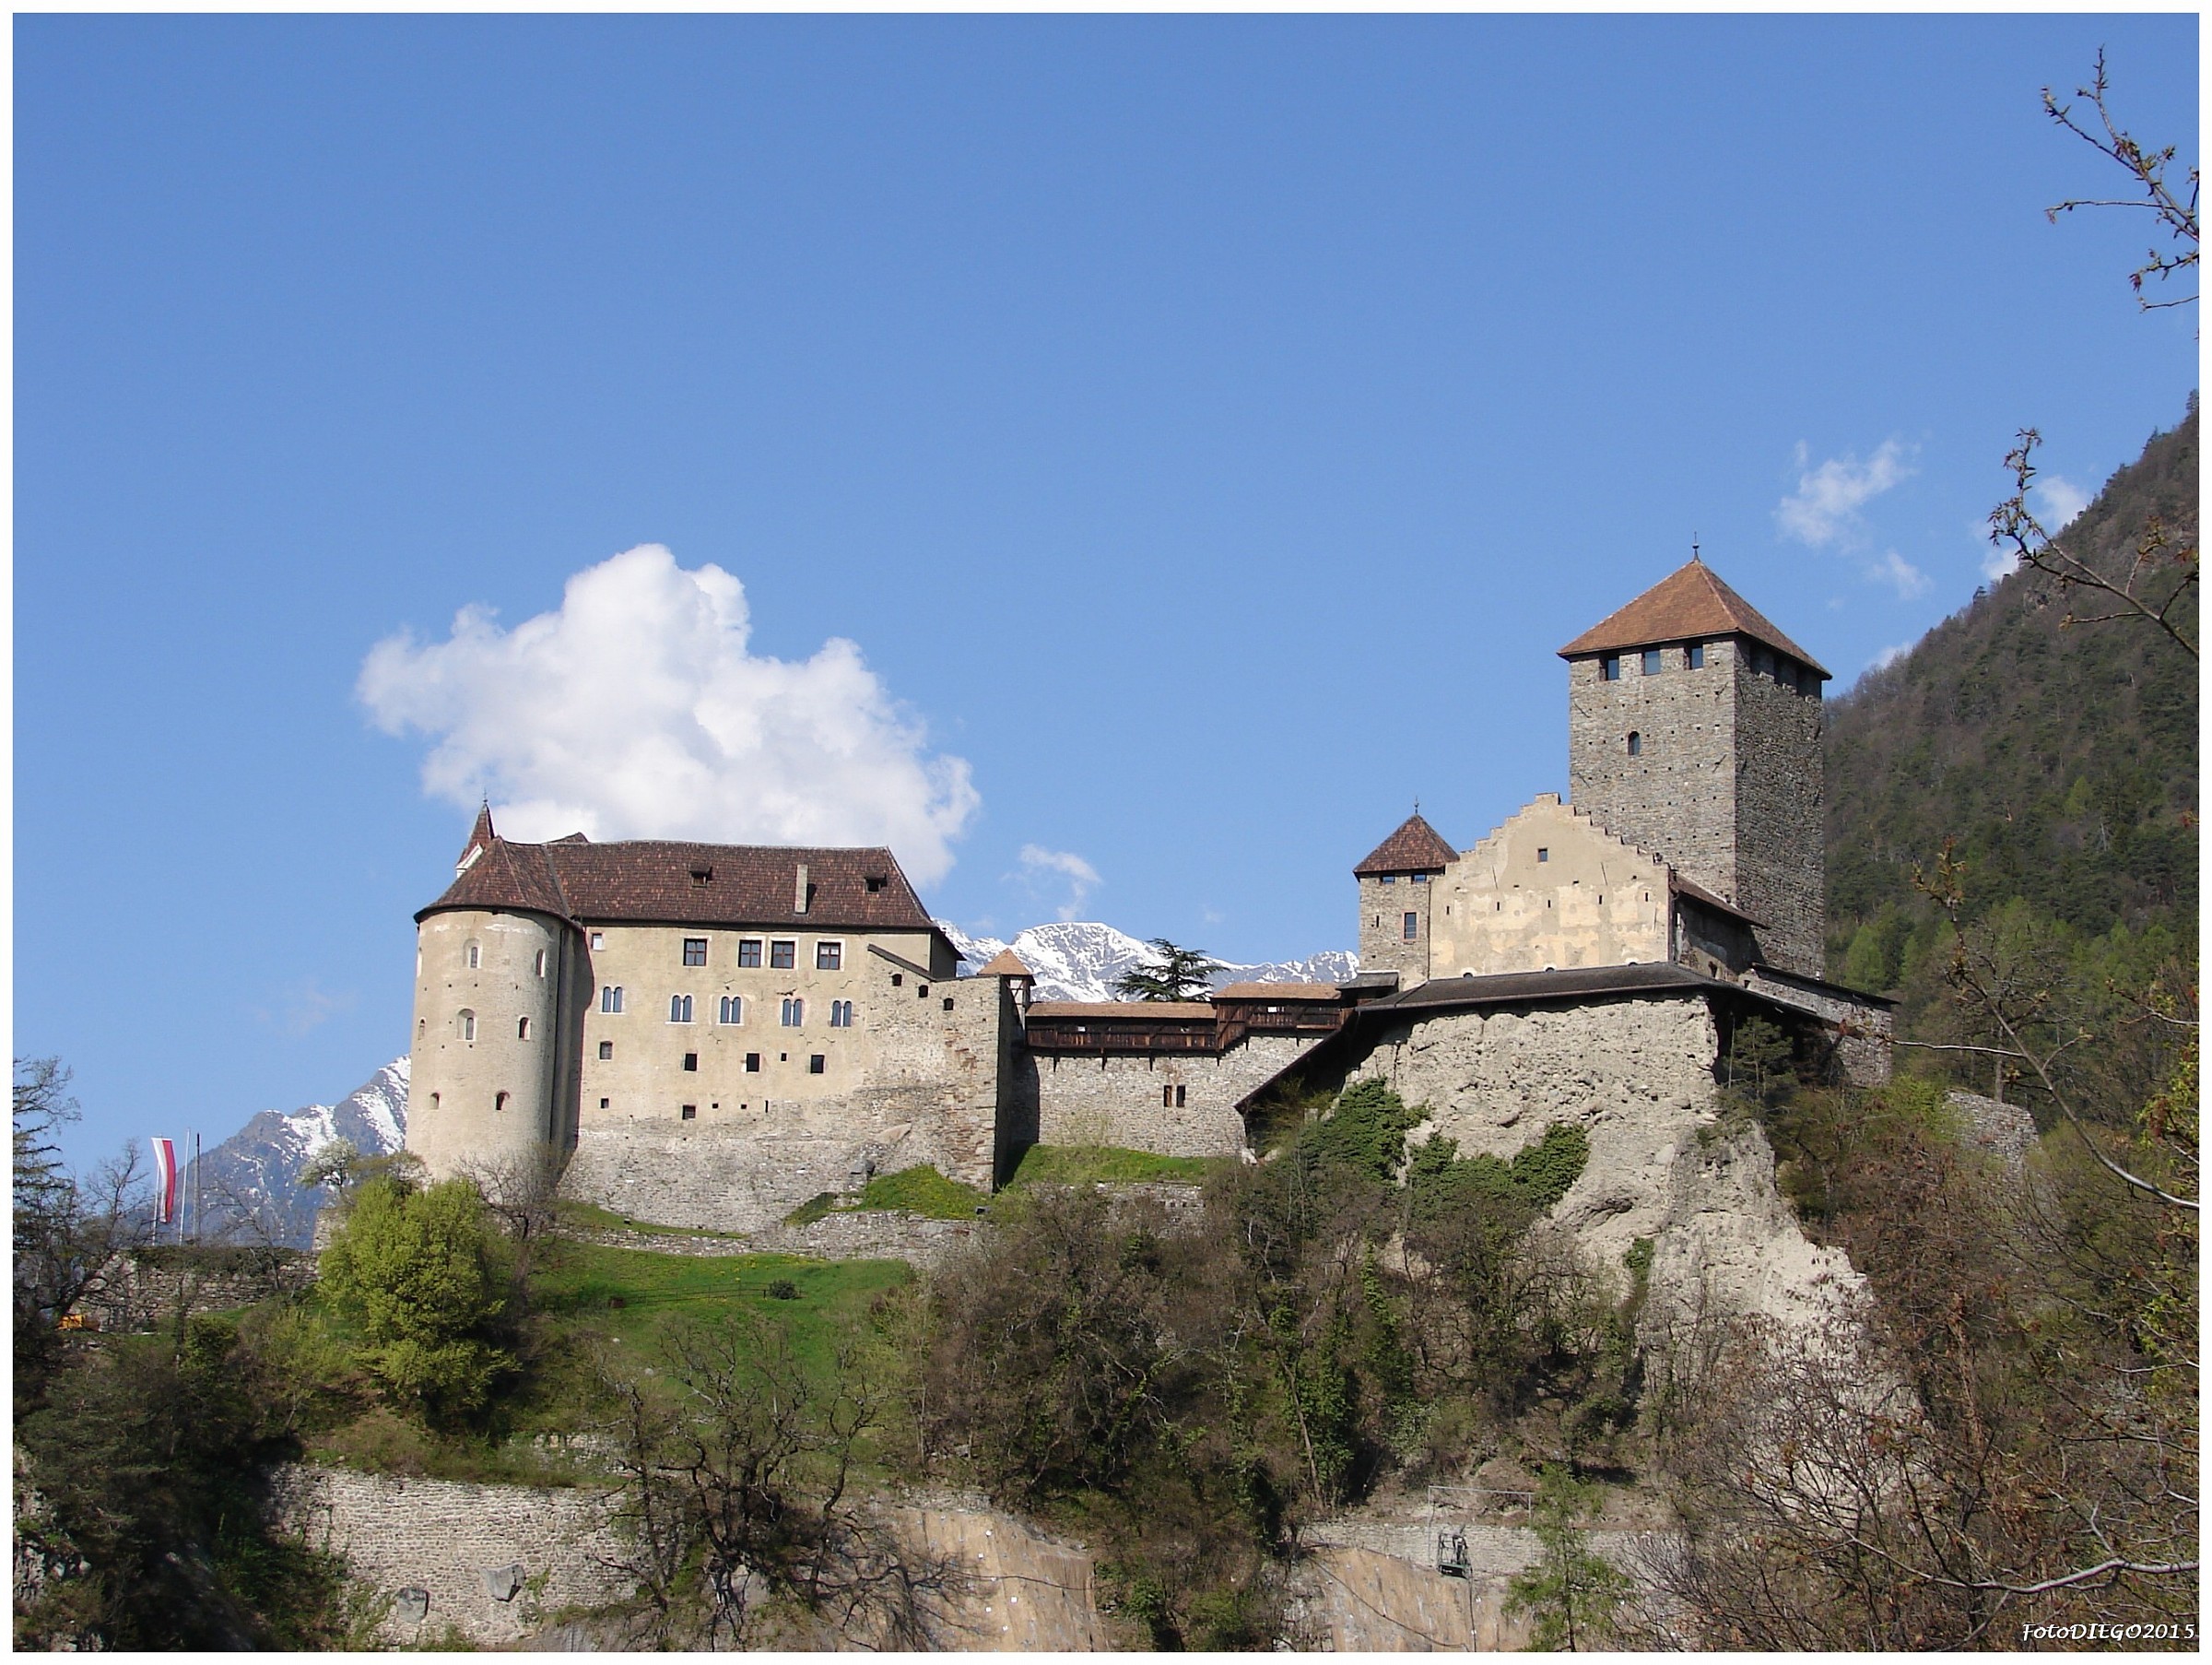 Tyrol - The castle...